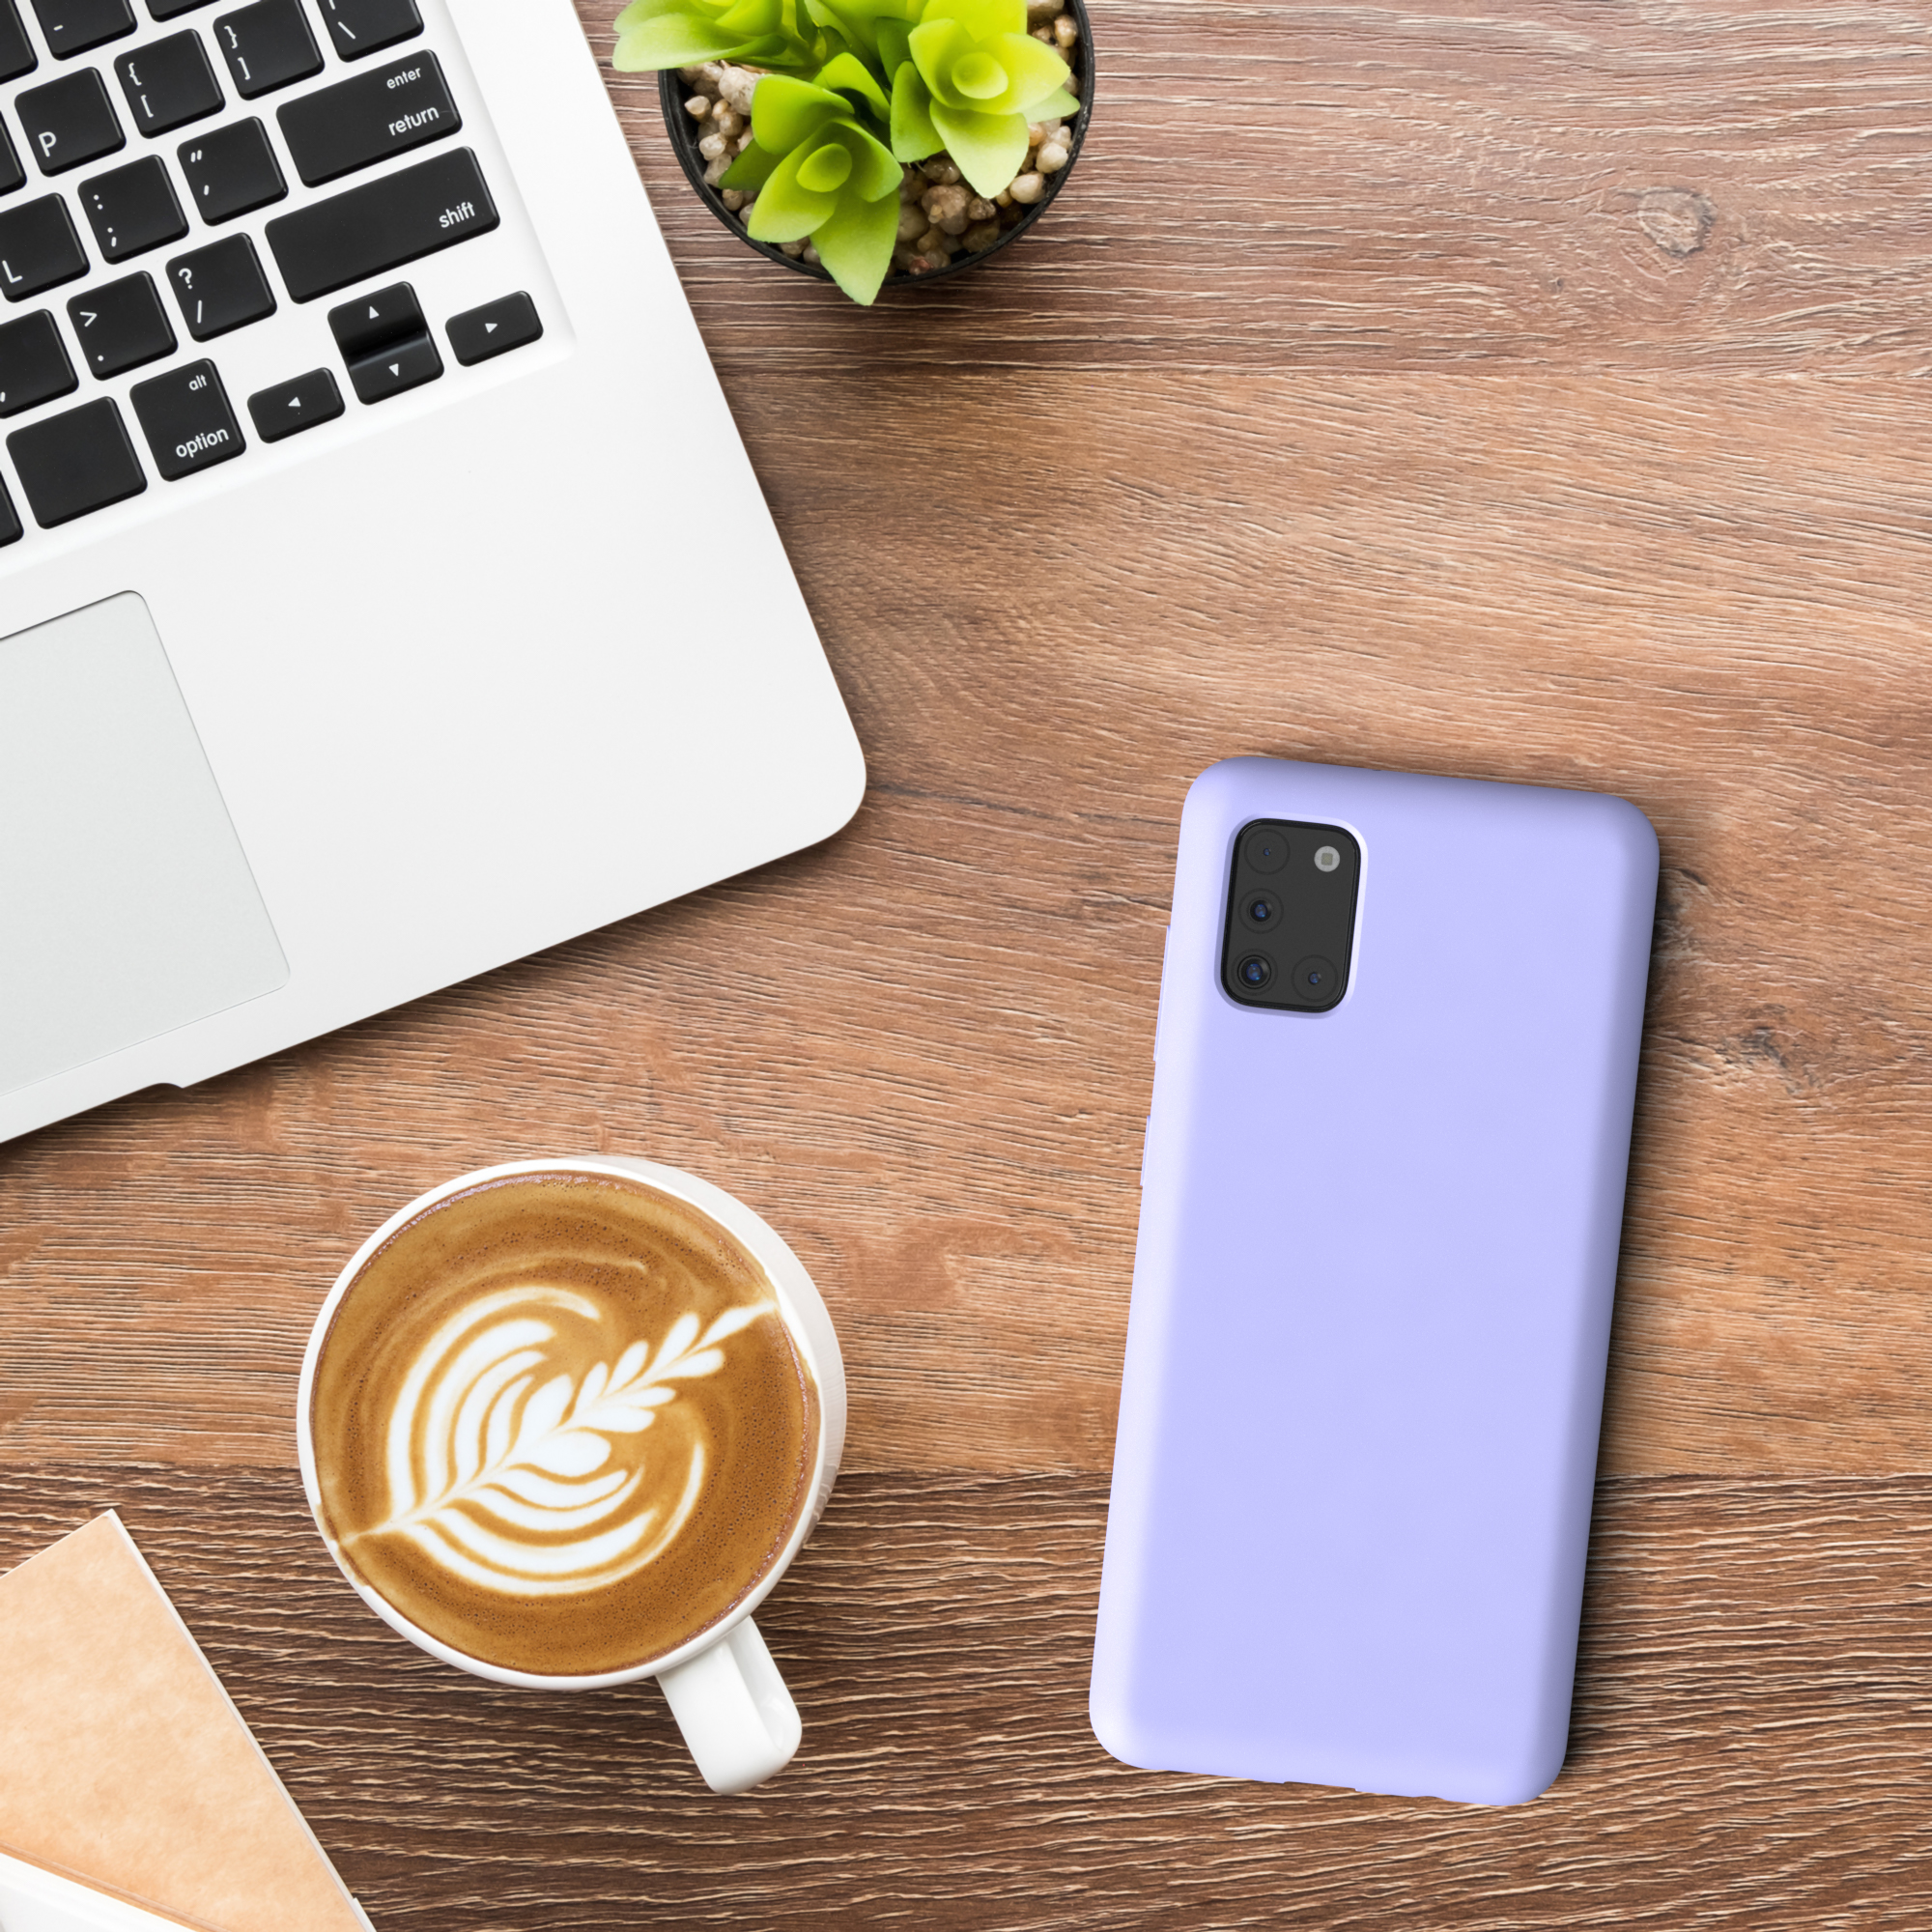 EAZY CASE / Silikon Violett Handycase, Premium A31, Galaxy Lavendel Backcover, Lila Samsung